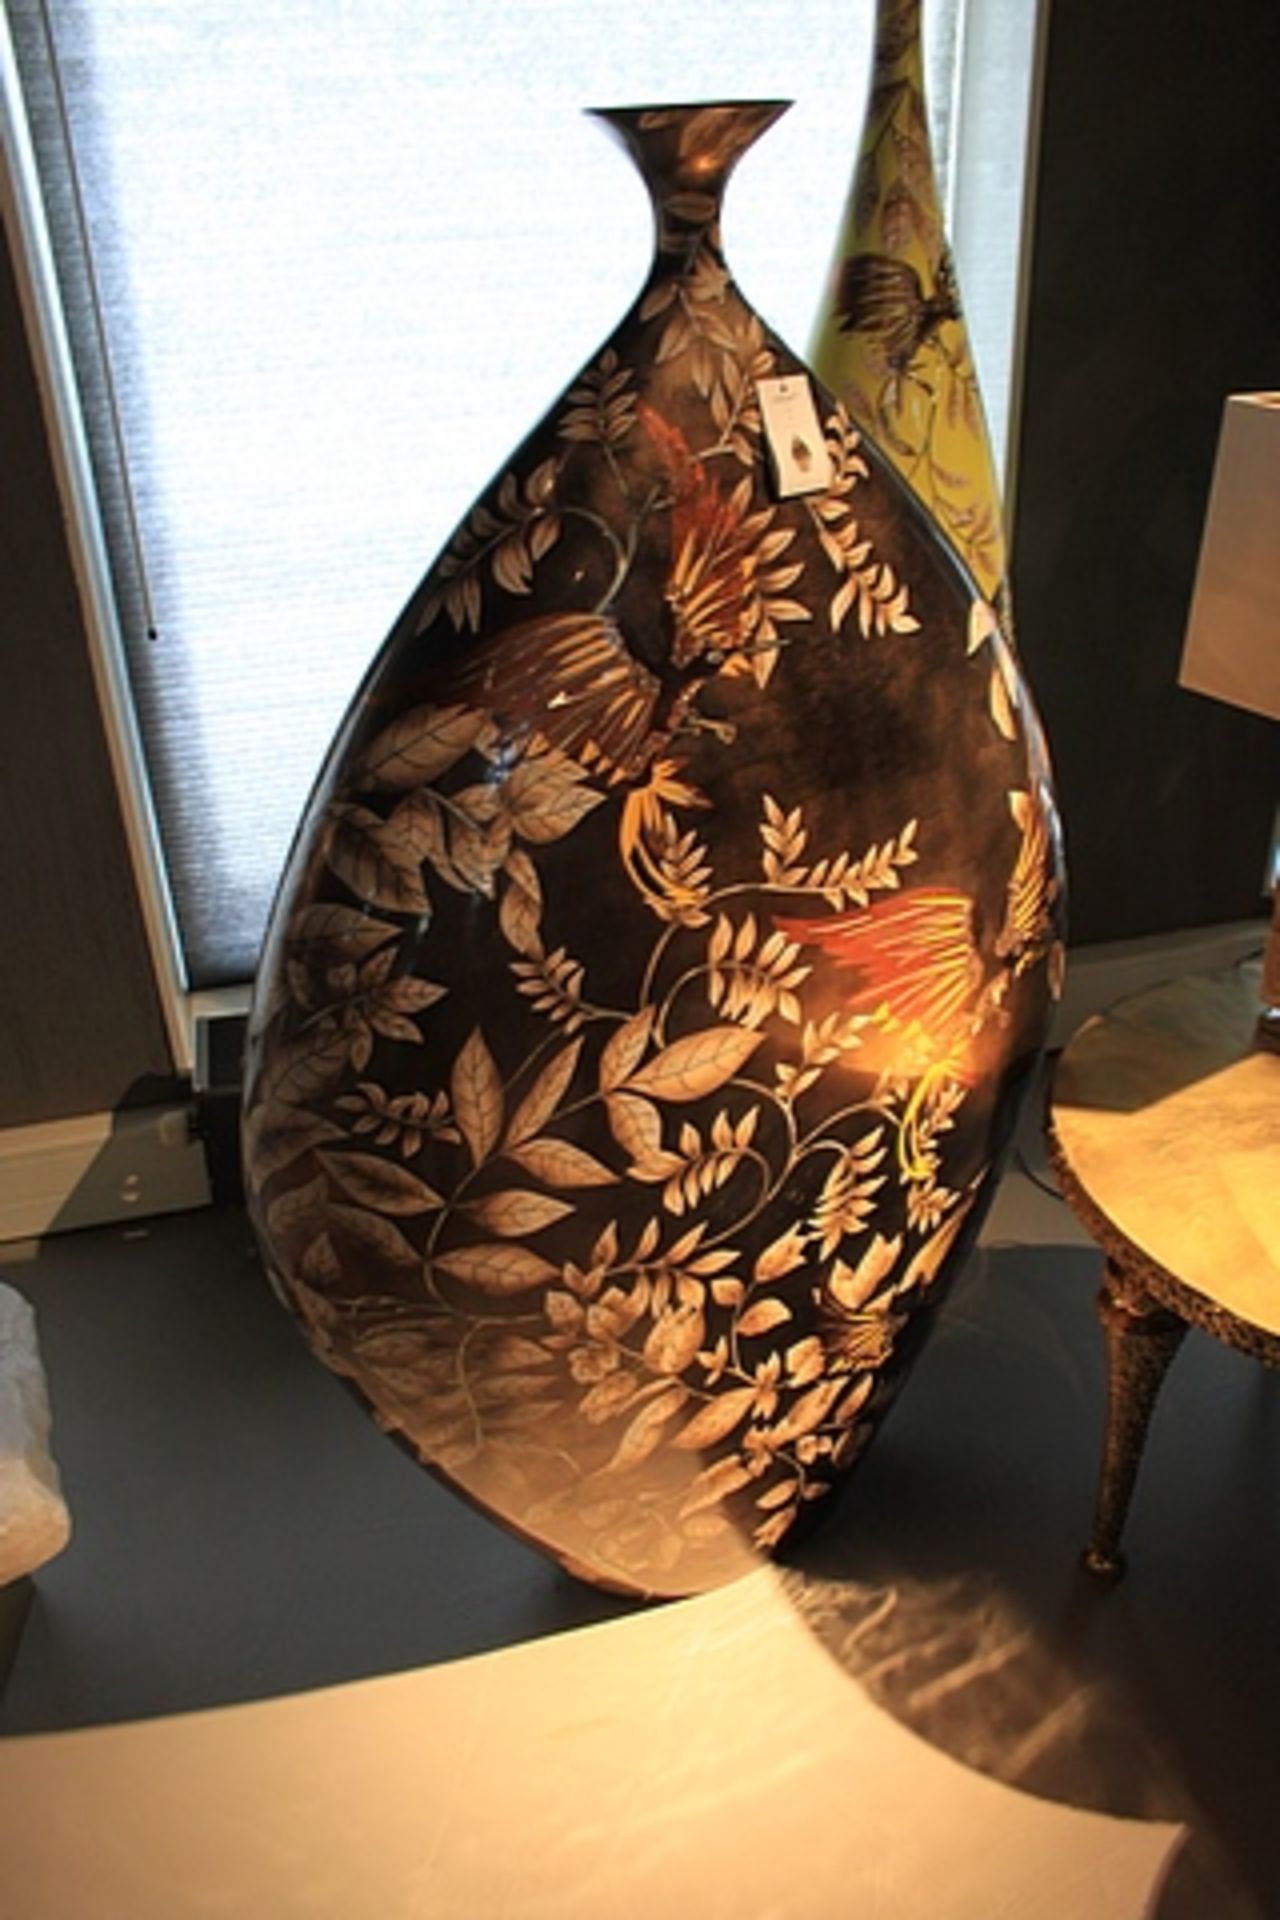 Vase Bird his stunning vase will illuminate any room, lending an eye-catching silhouette whether